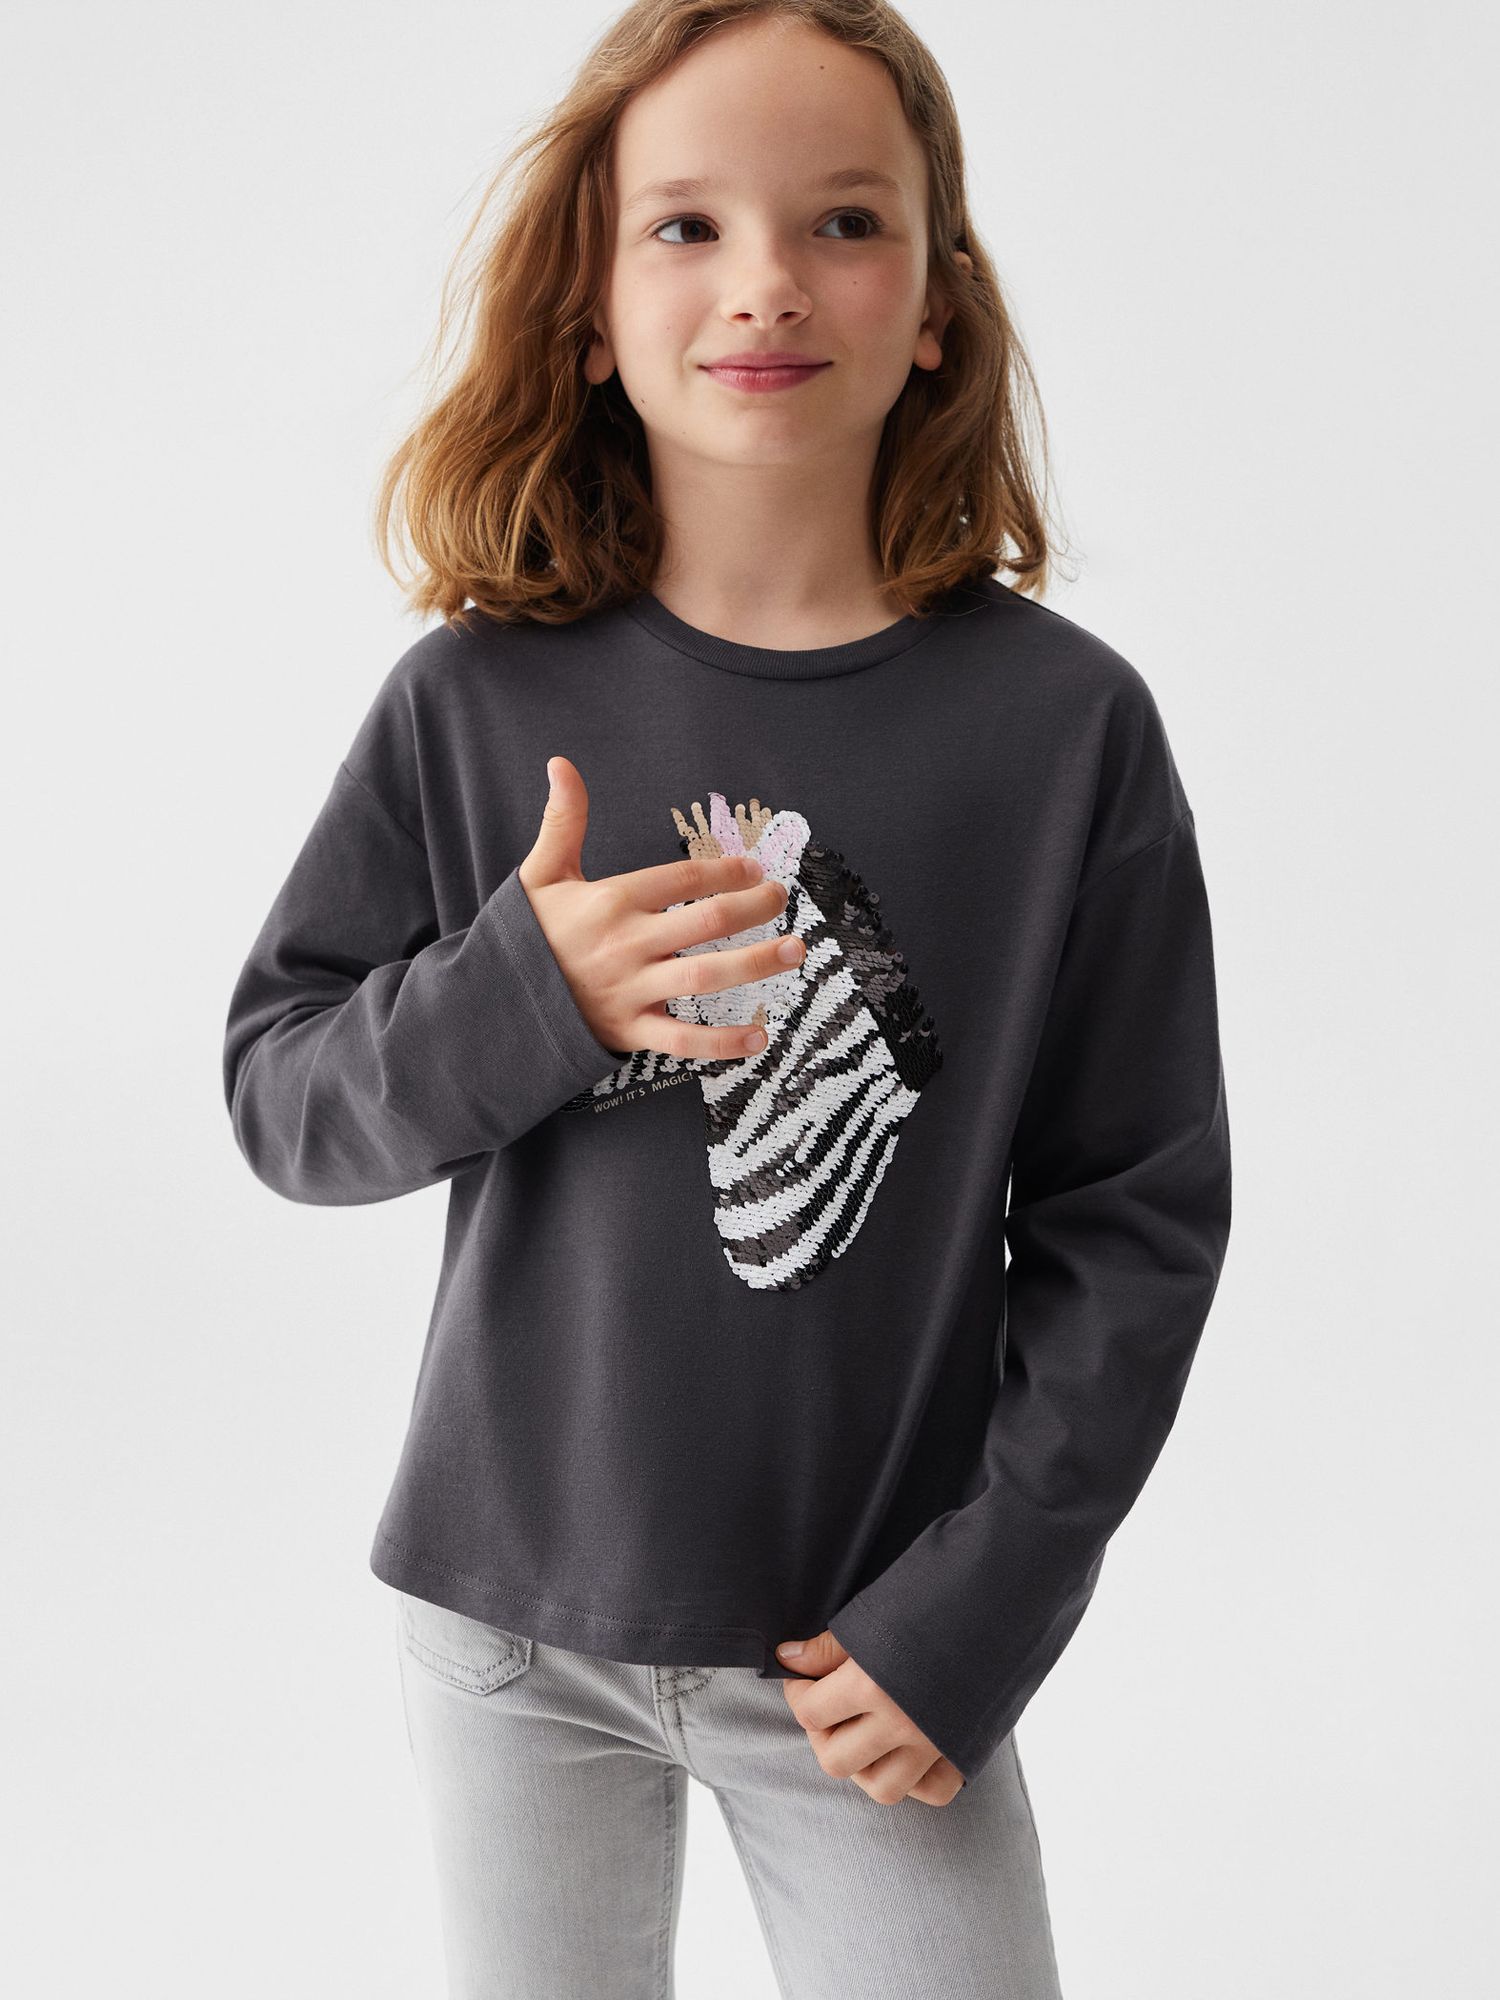 Mango Kids' Sequin Zebra Long Sleeve T-Shirt, Charcoal, 13-14 years